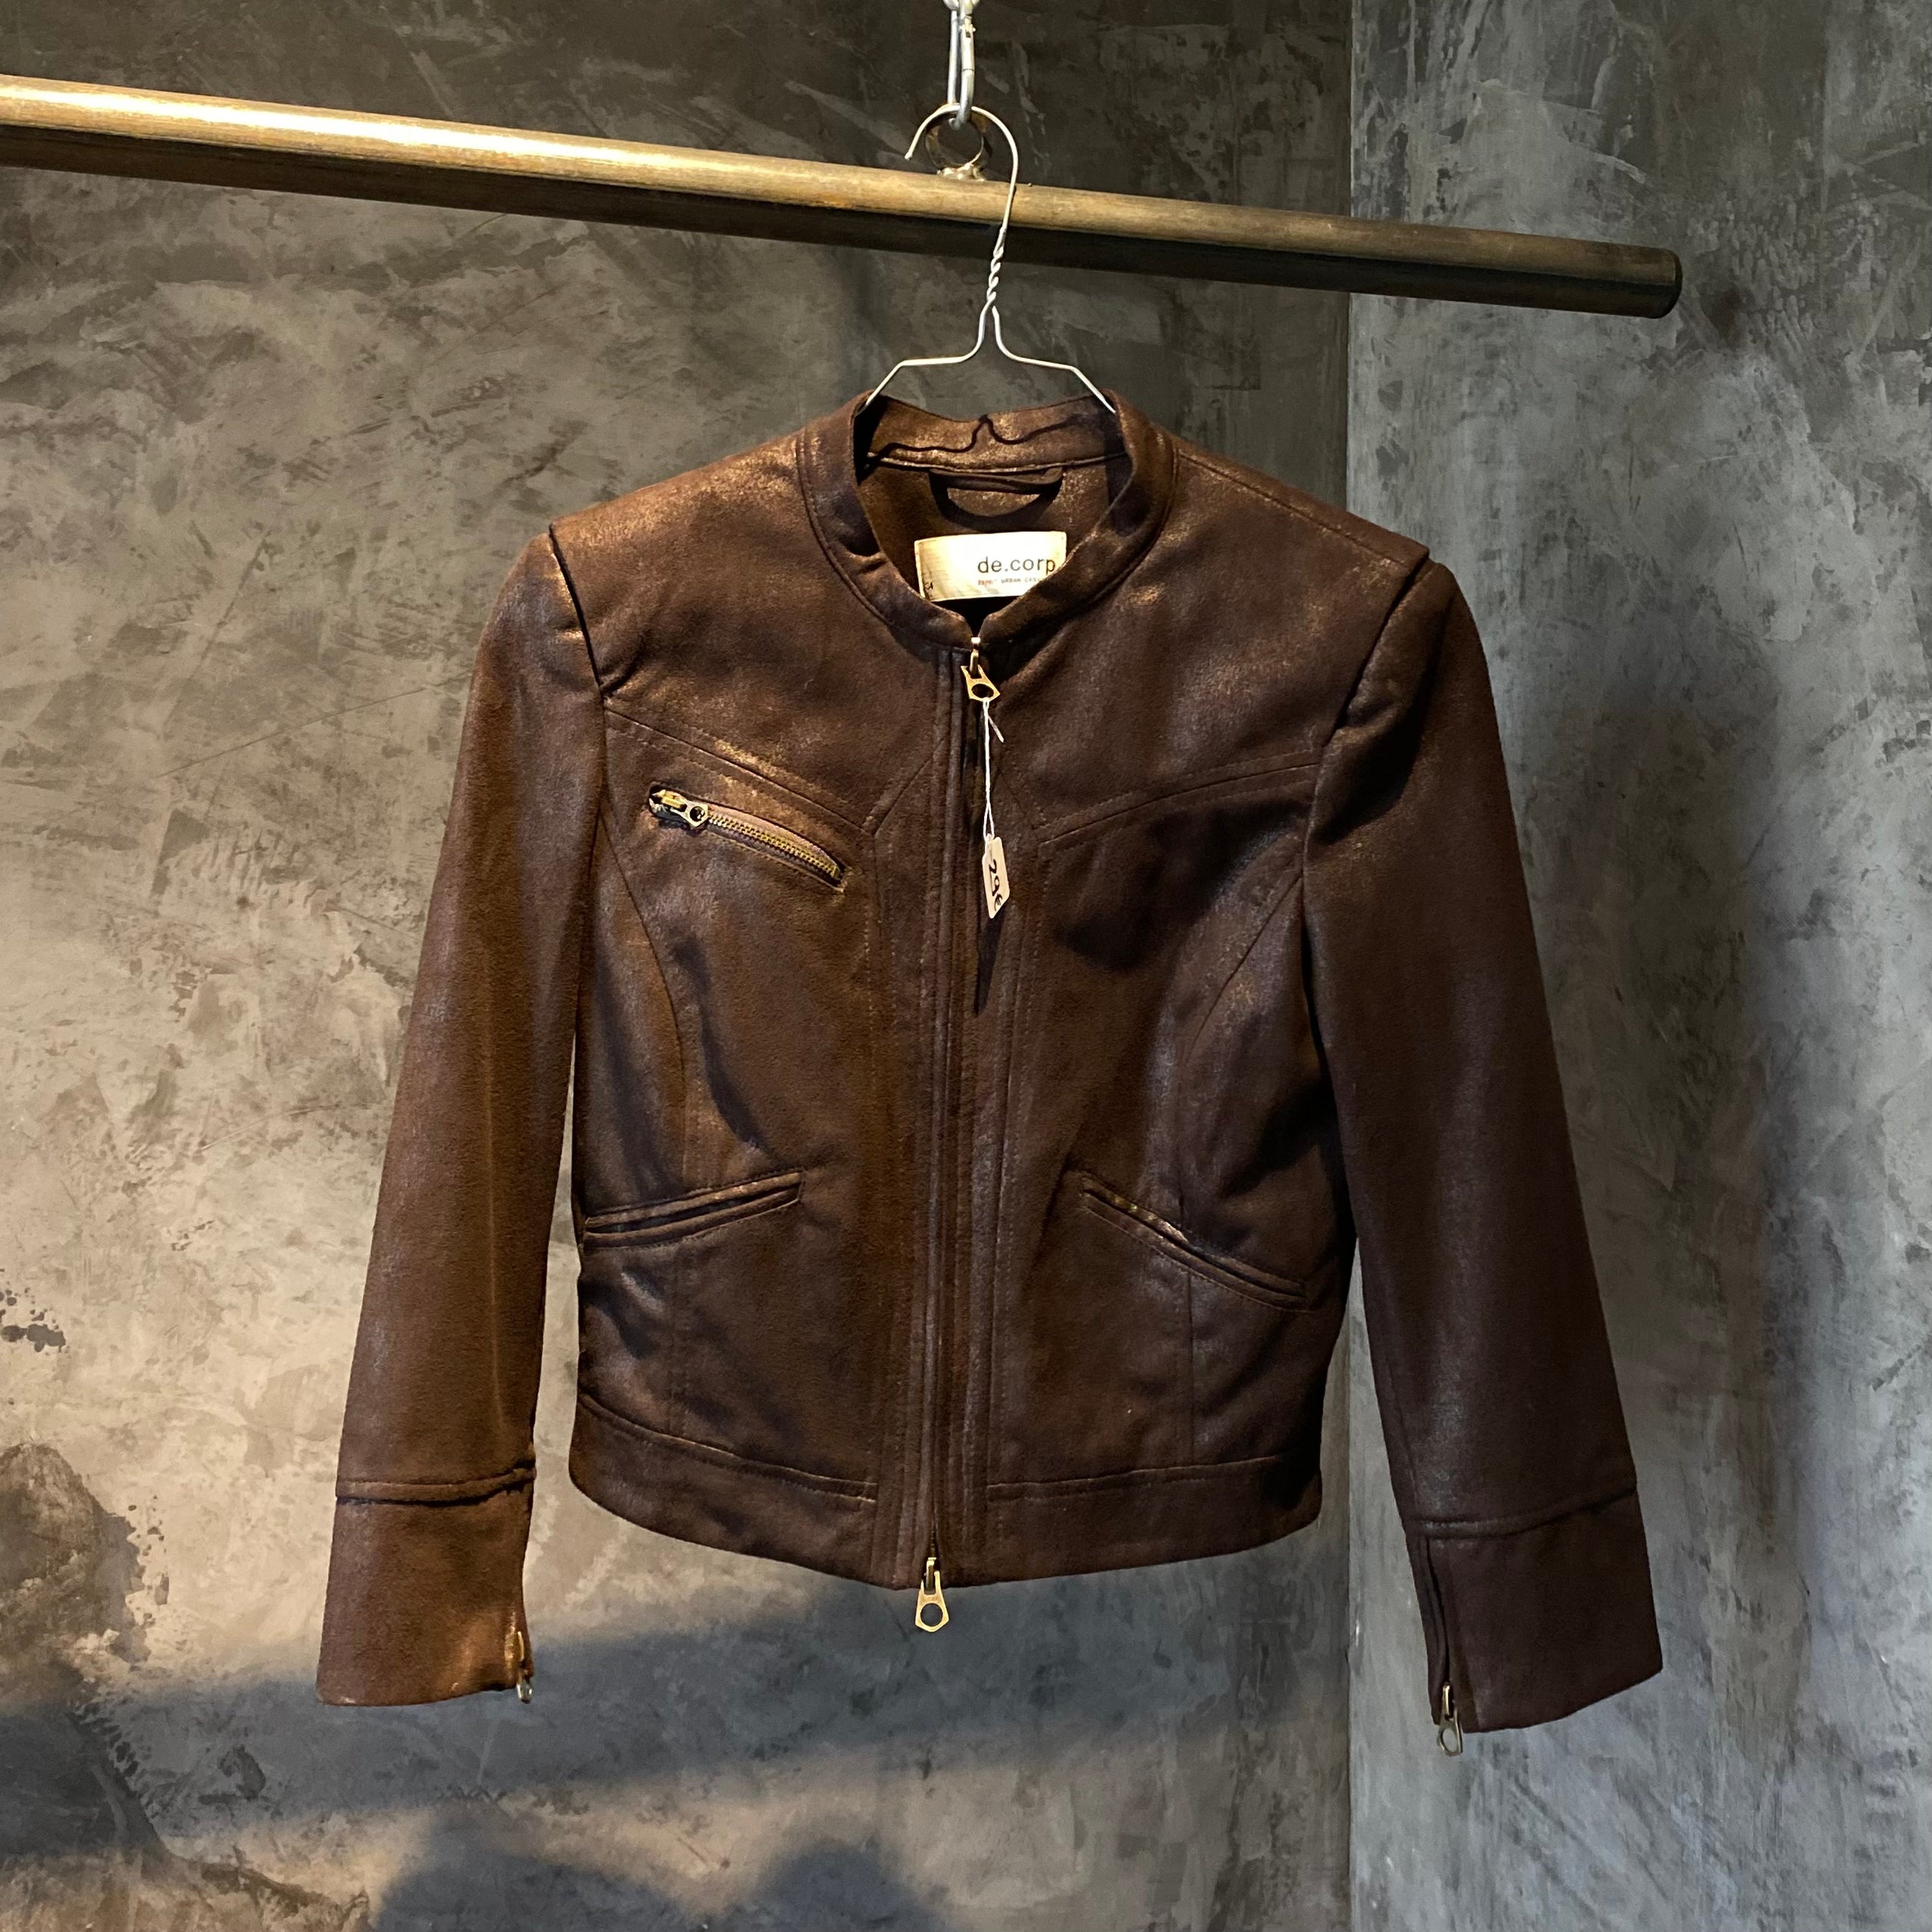 De Corp Brown Leather Jacket